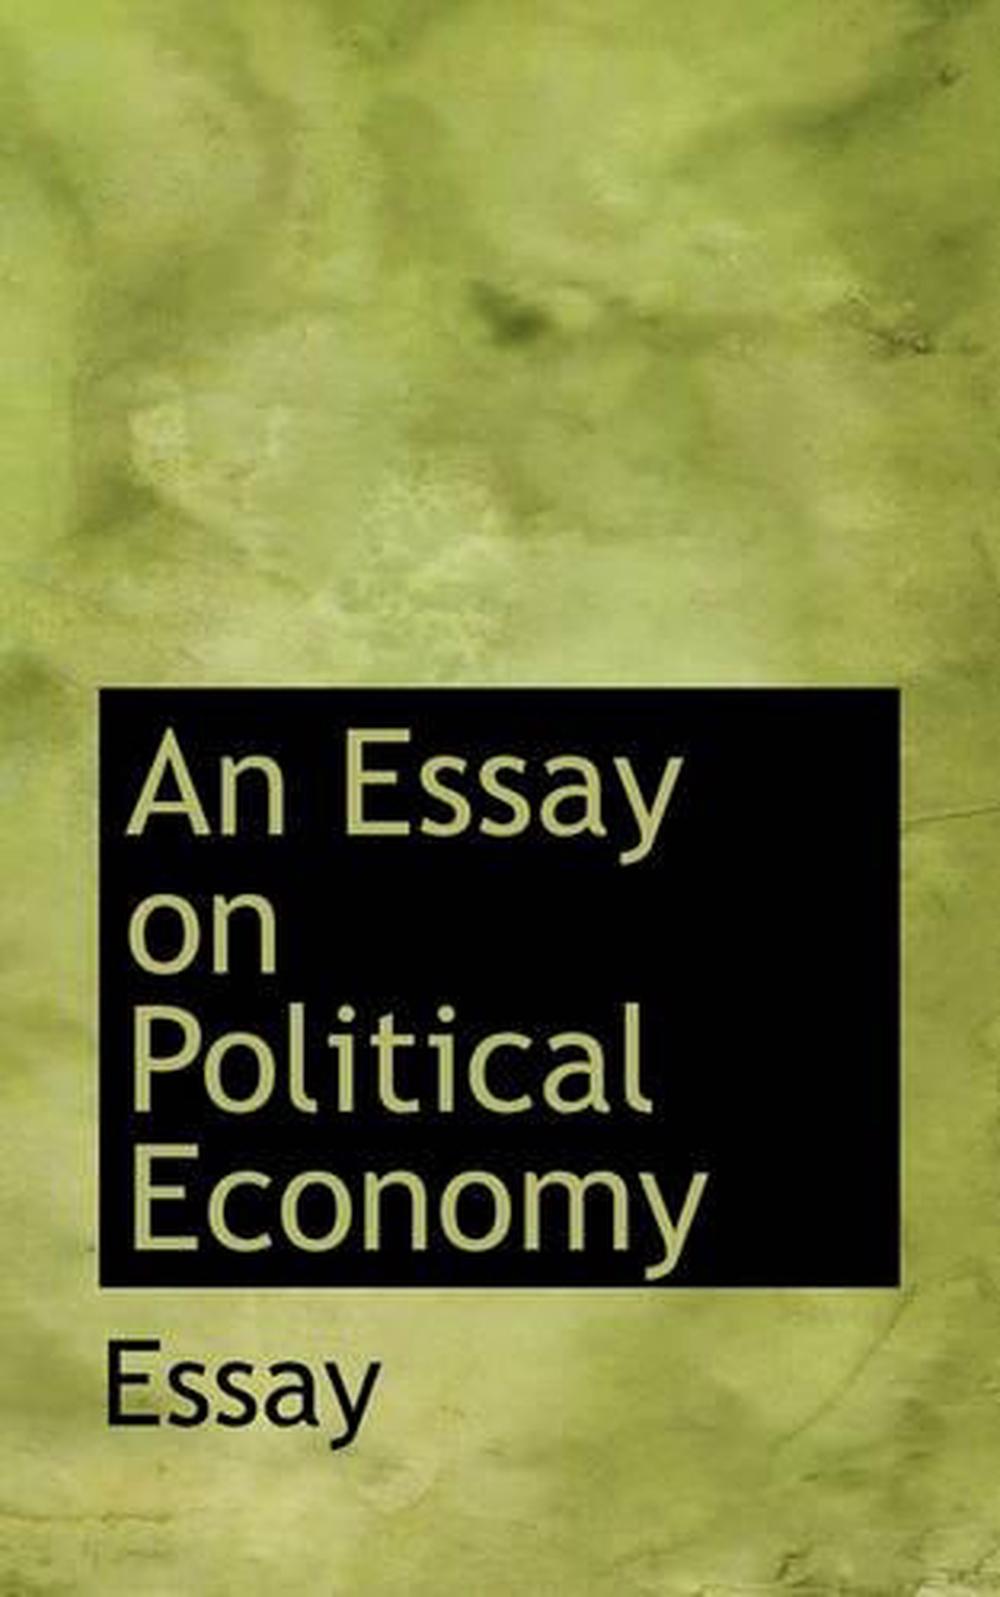 political economy essay topics